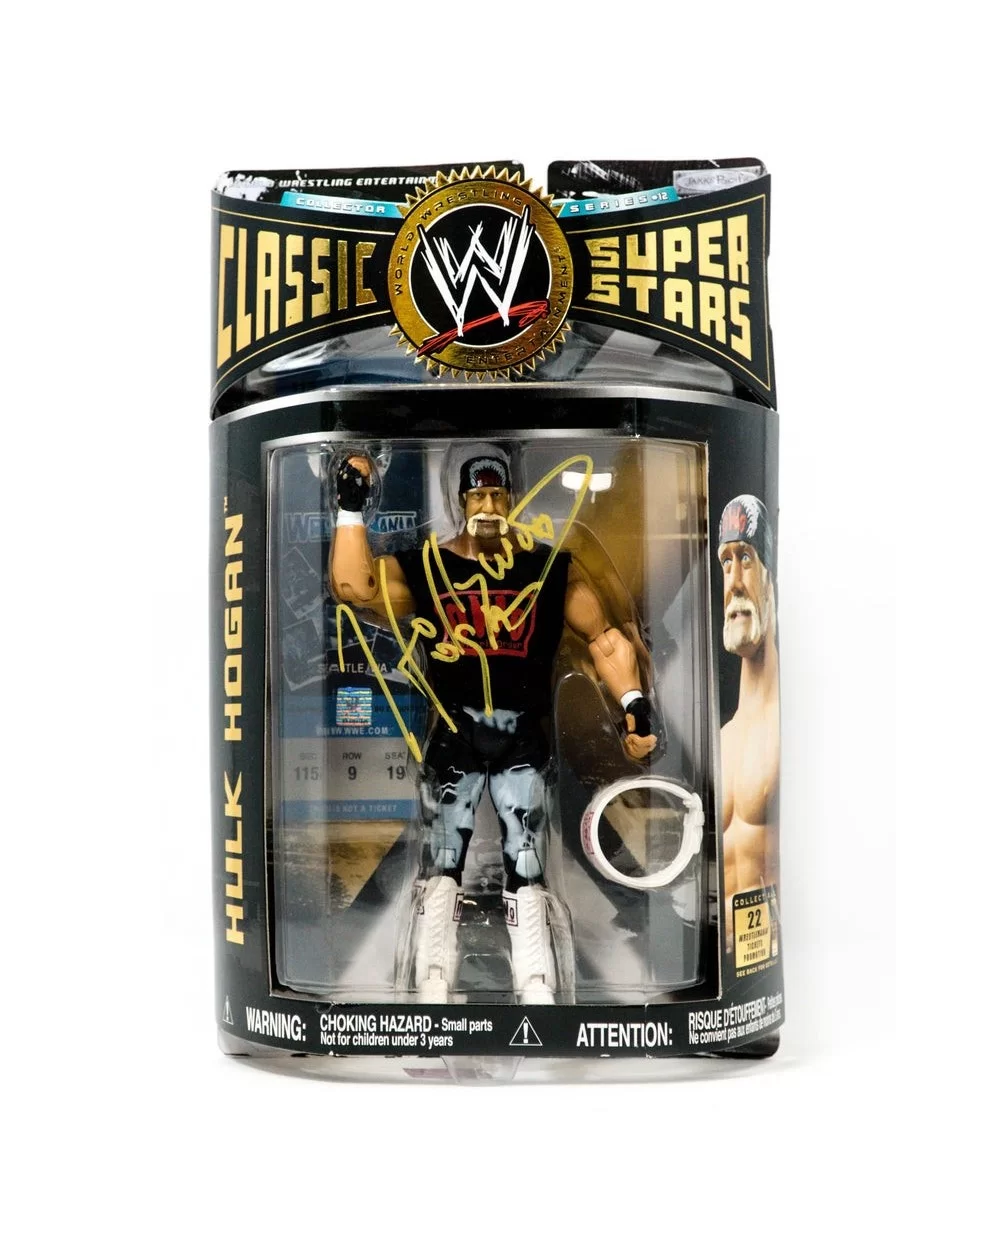 Hulk Hogan Signed WWE Classic Superstars Action Figure $112.00 Signed Items